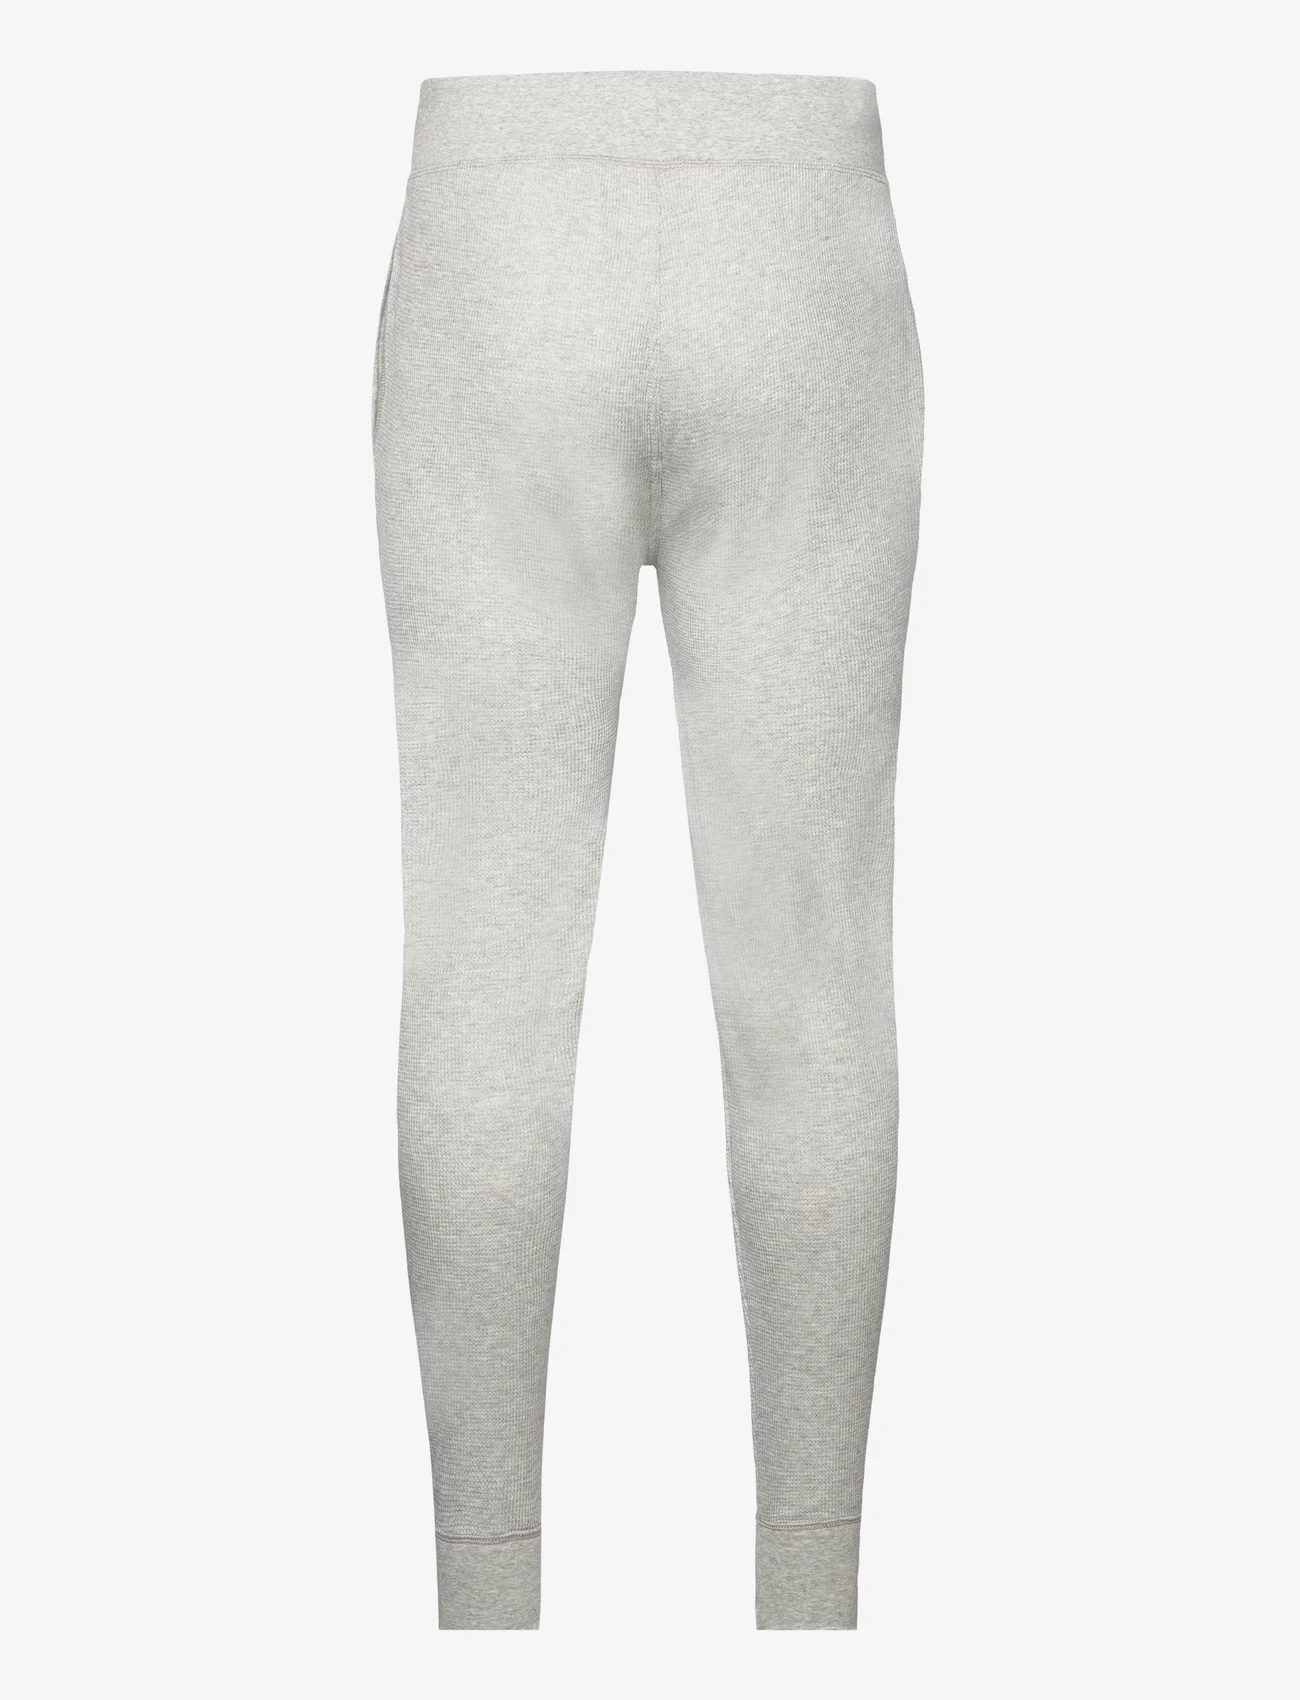 Polo Ralph Lauren Underwear - WAFFLE-SLE-BOT - pižamų kelnės - andover heather - 1